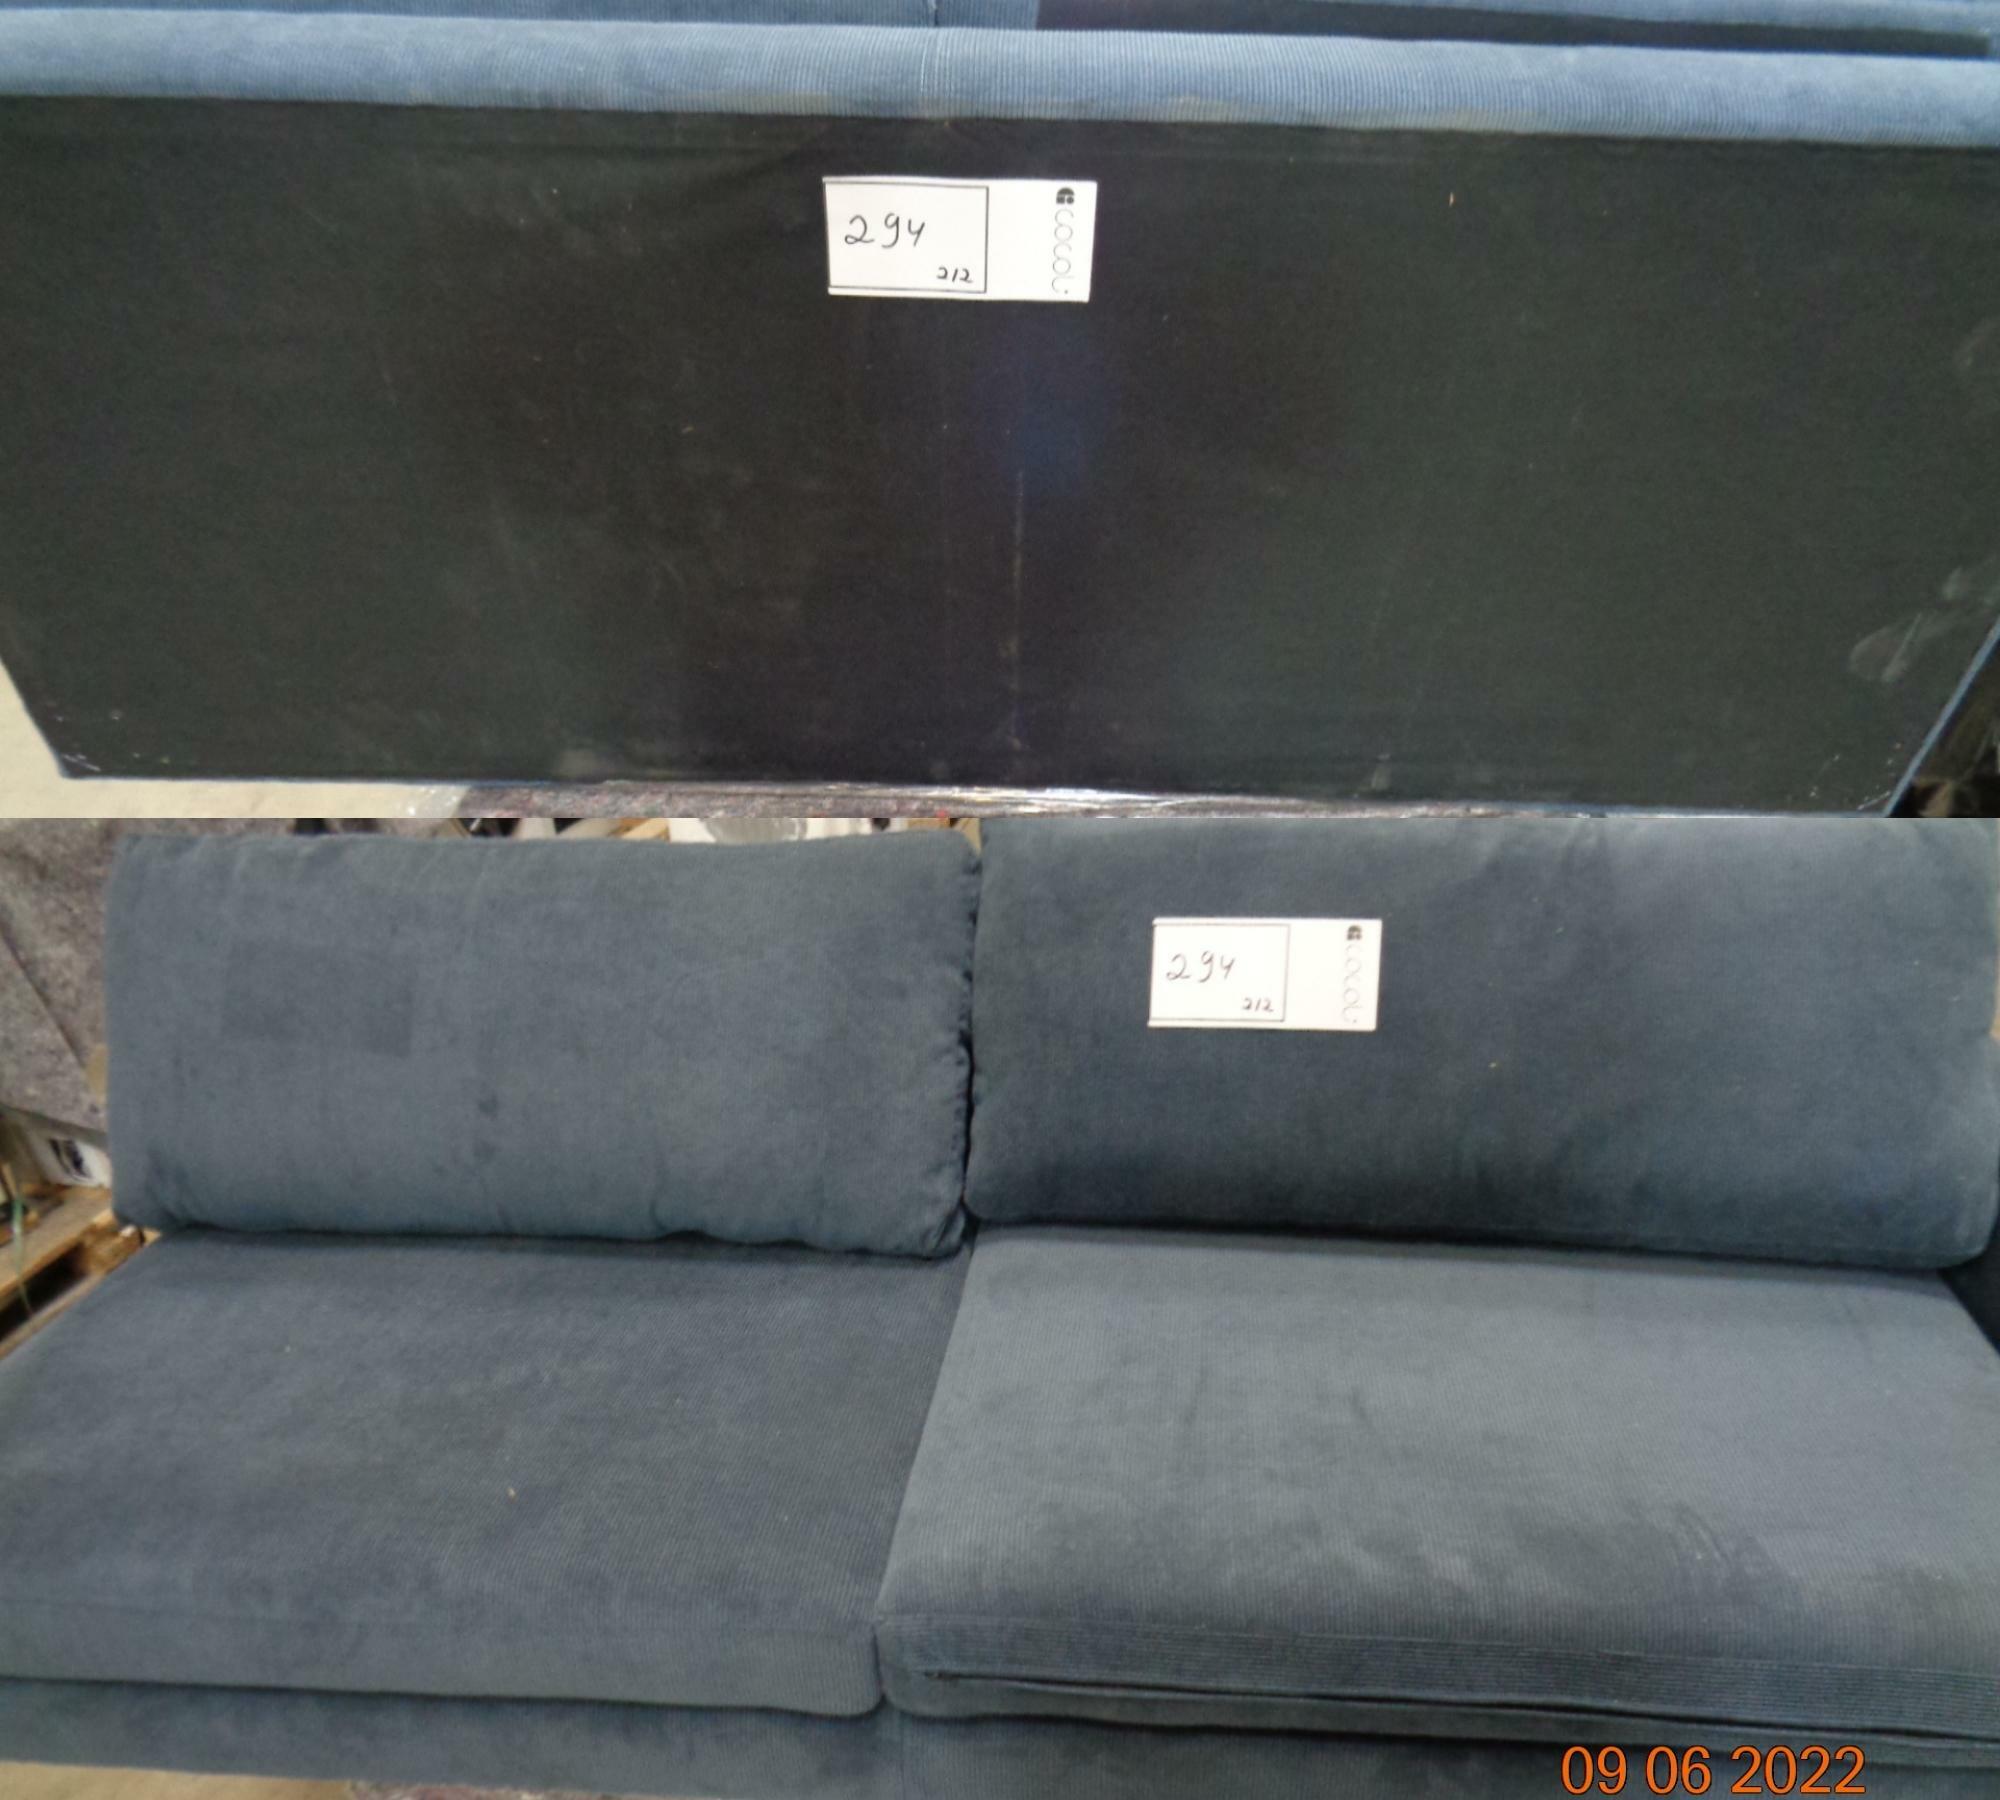 Astha Sofa mit Récamiere Links Sorrent Steel Blue 7